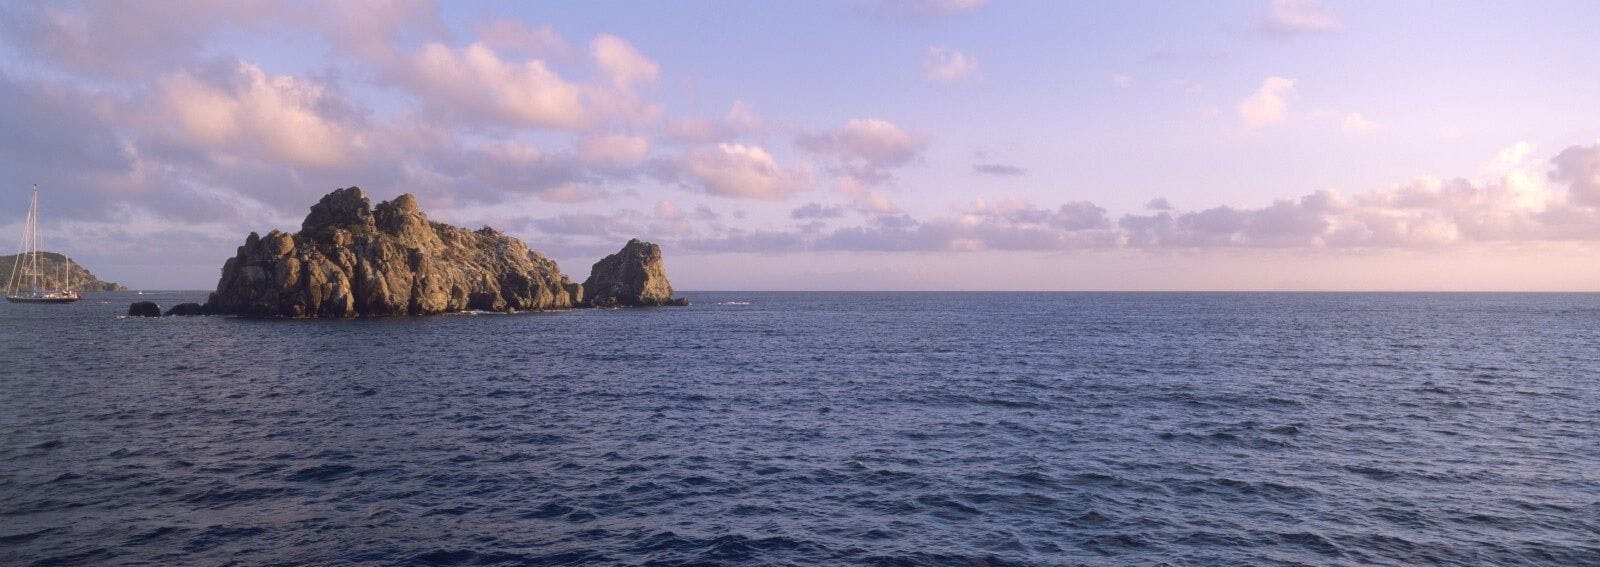 Pointe Milou rock formation in the ocean